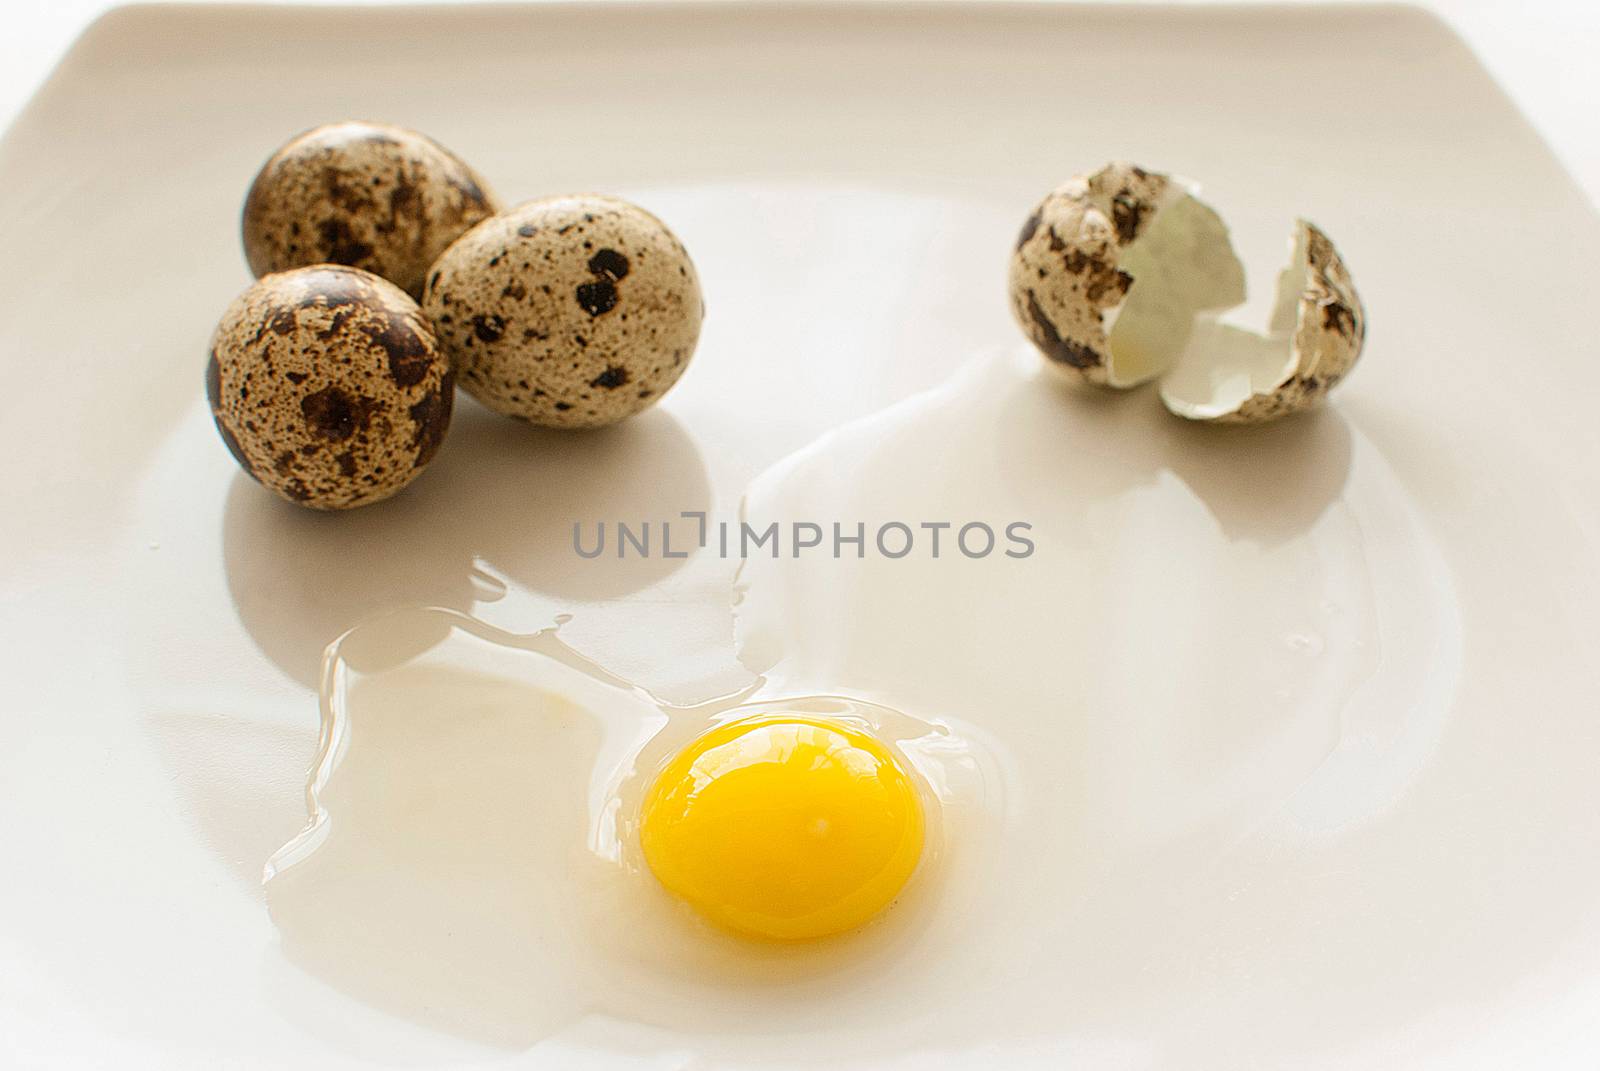 healthy fresh organic quail eggs